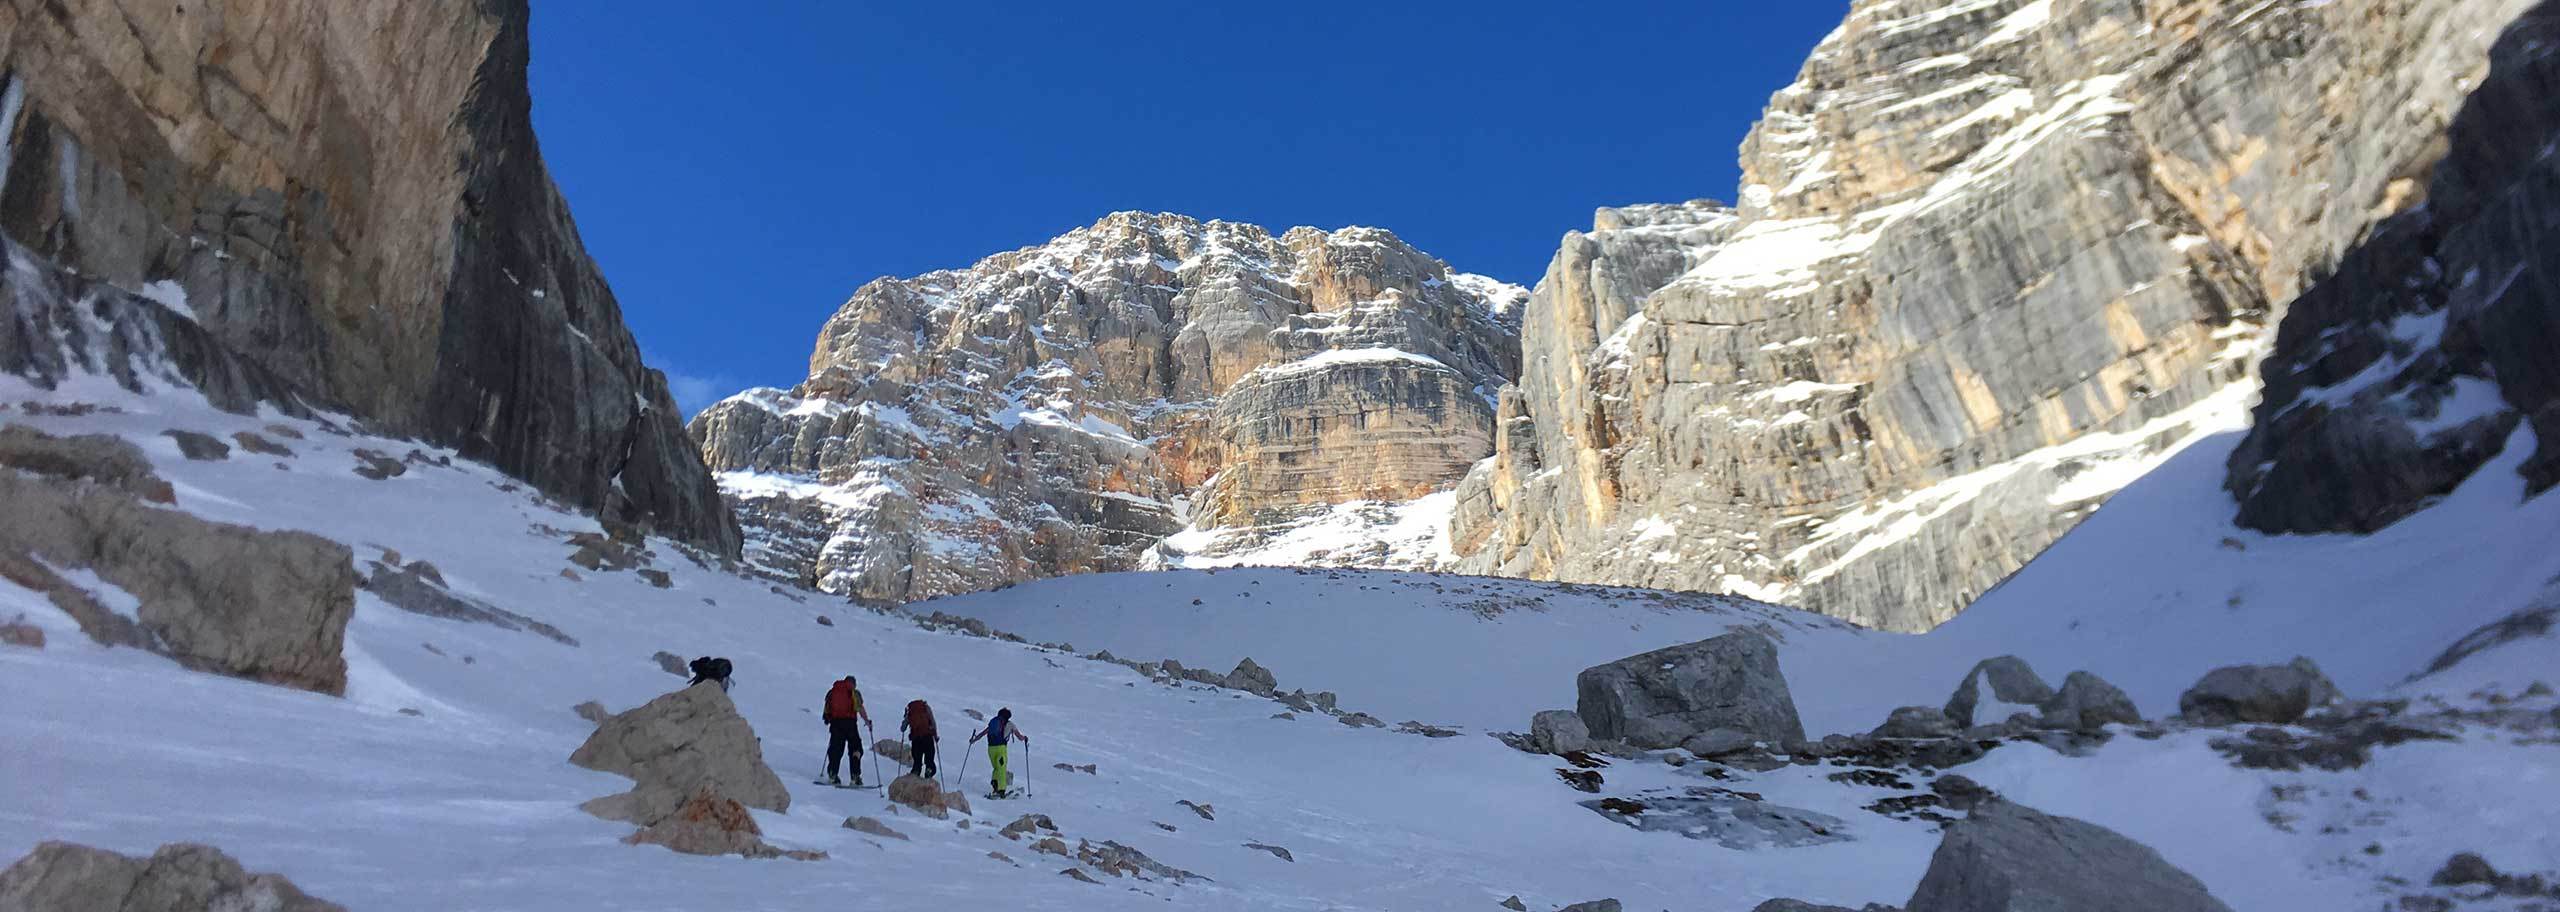 Ski Touring in Alta Badia with a Mountain Guide